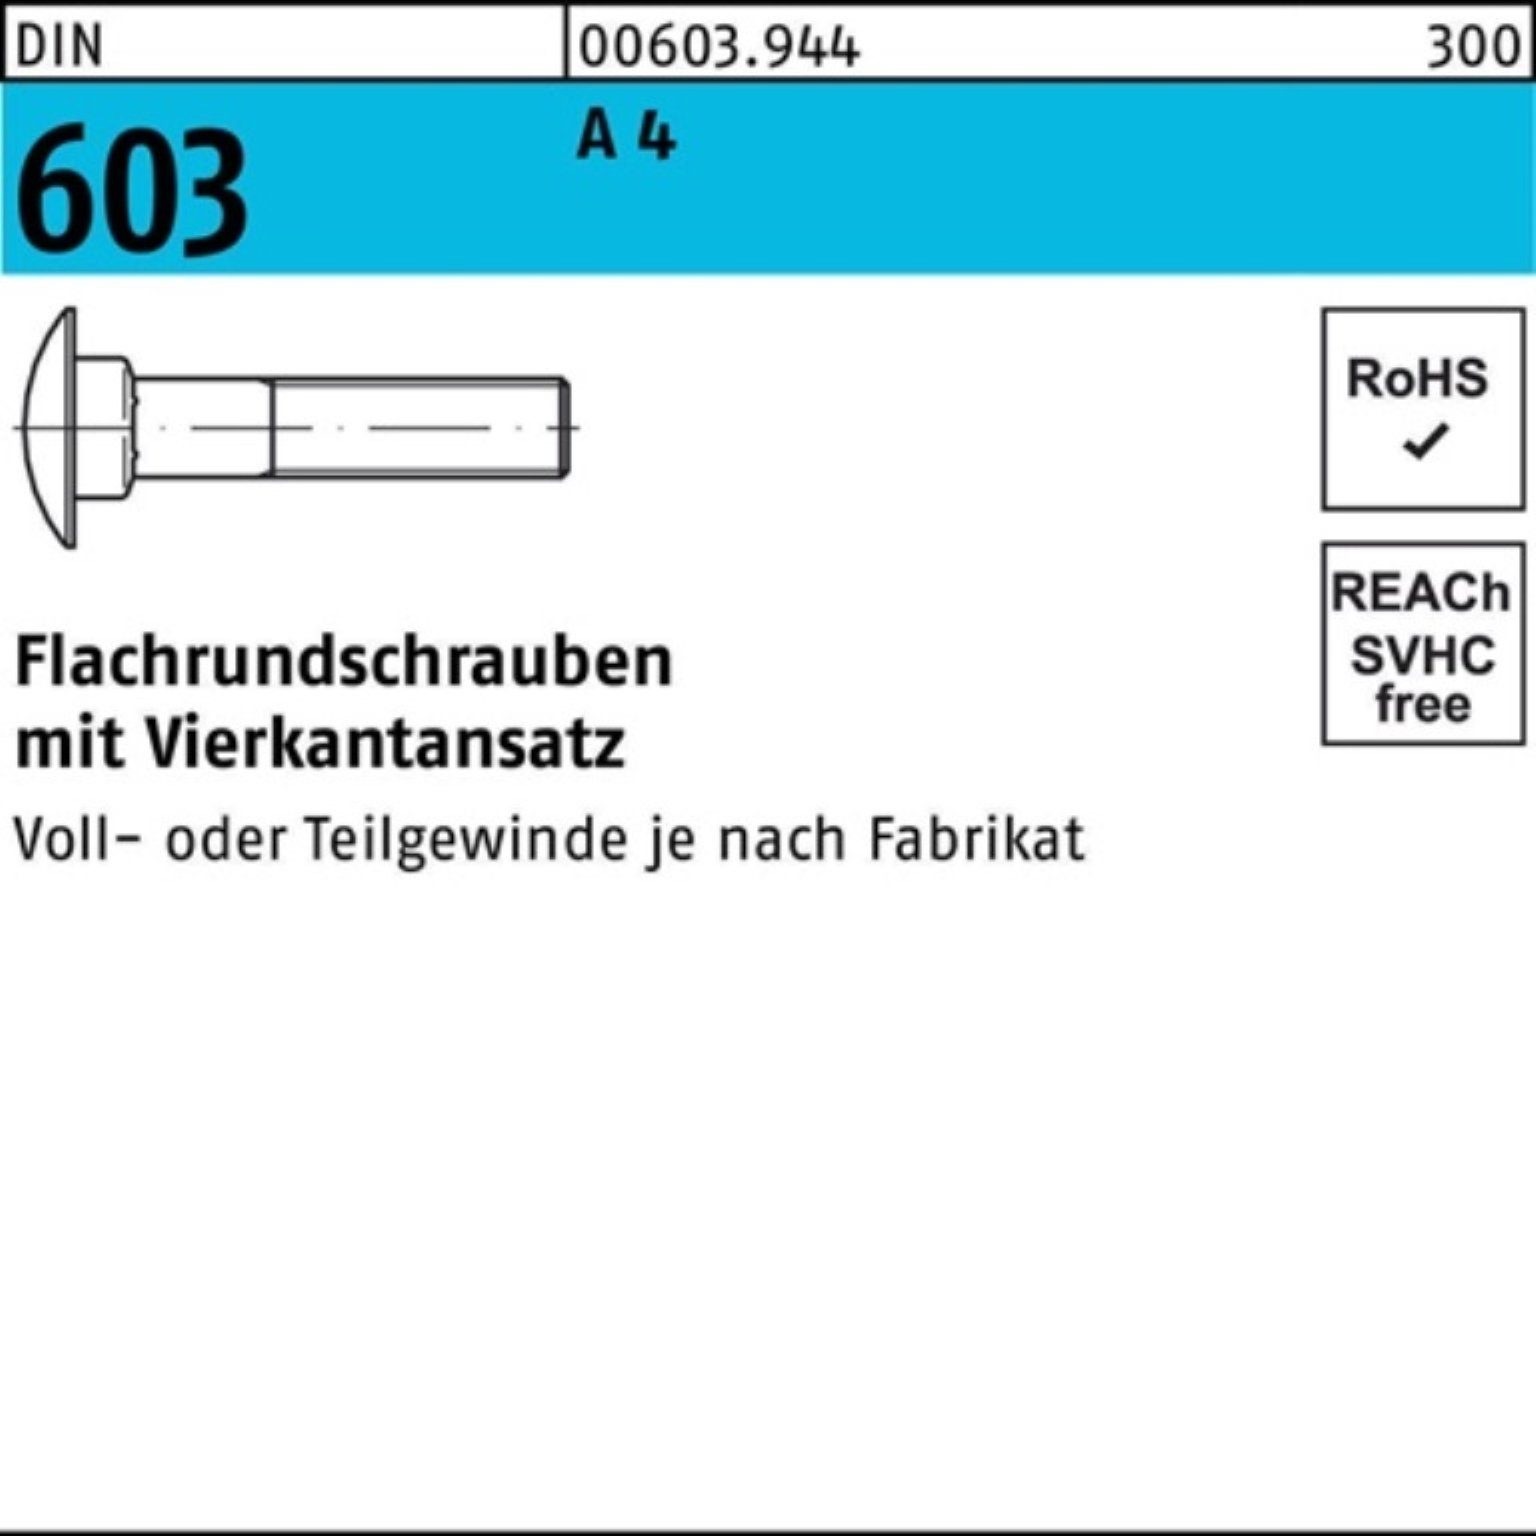 Reyher Schraube 100er Pack Flachrundschraube DIN 603 Vierkantansatz M8x 140 A 4 10 St